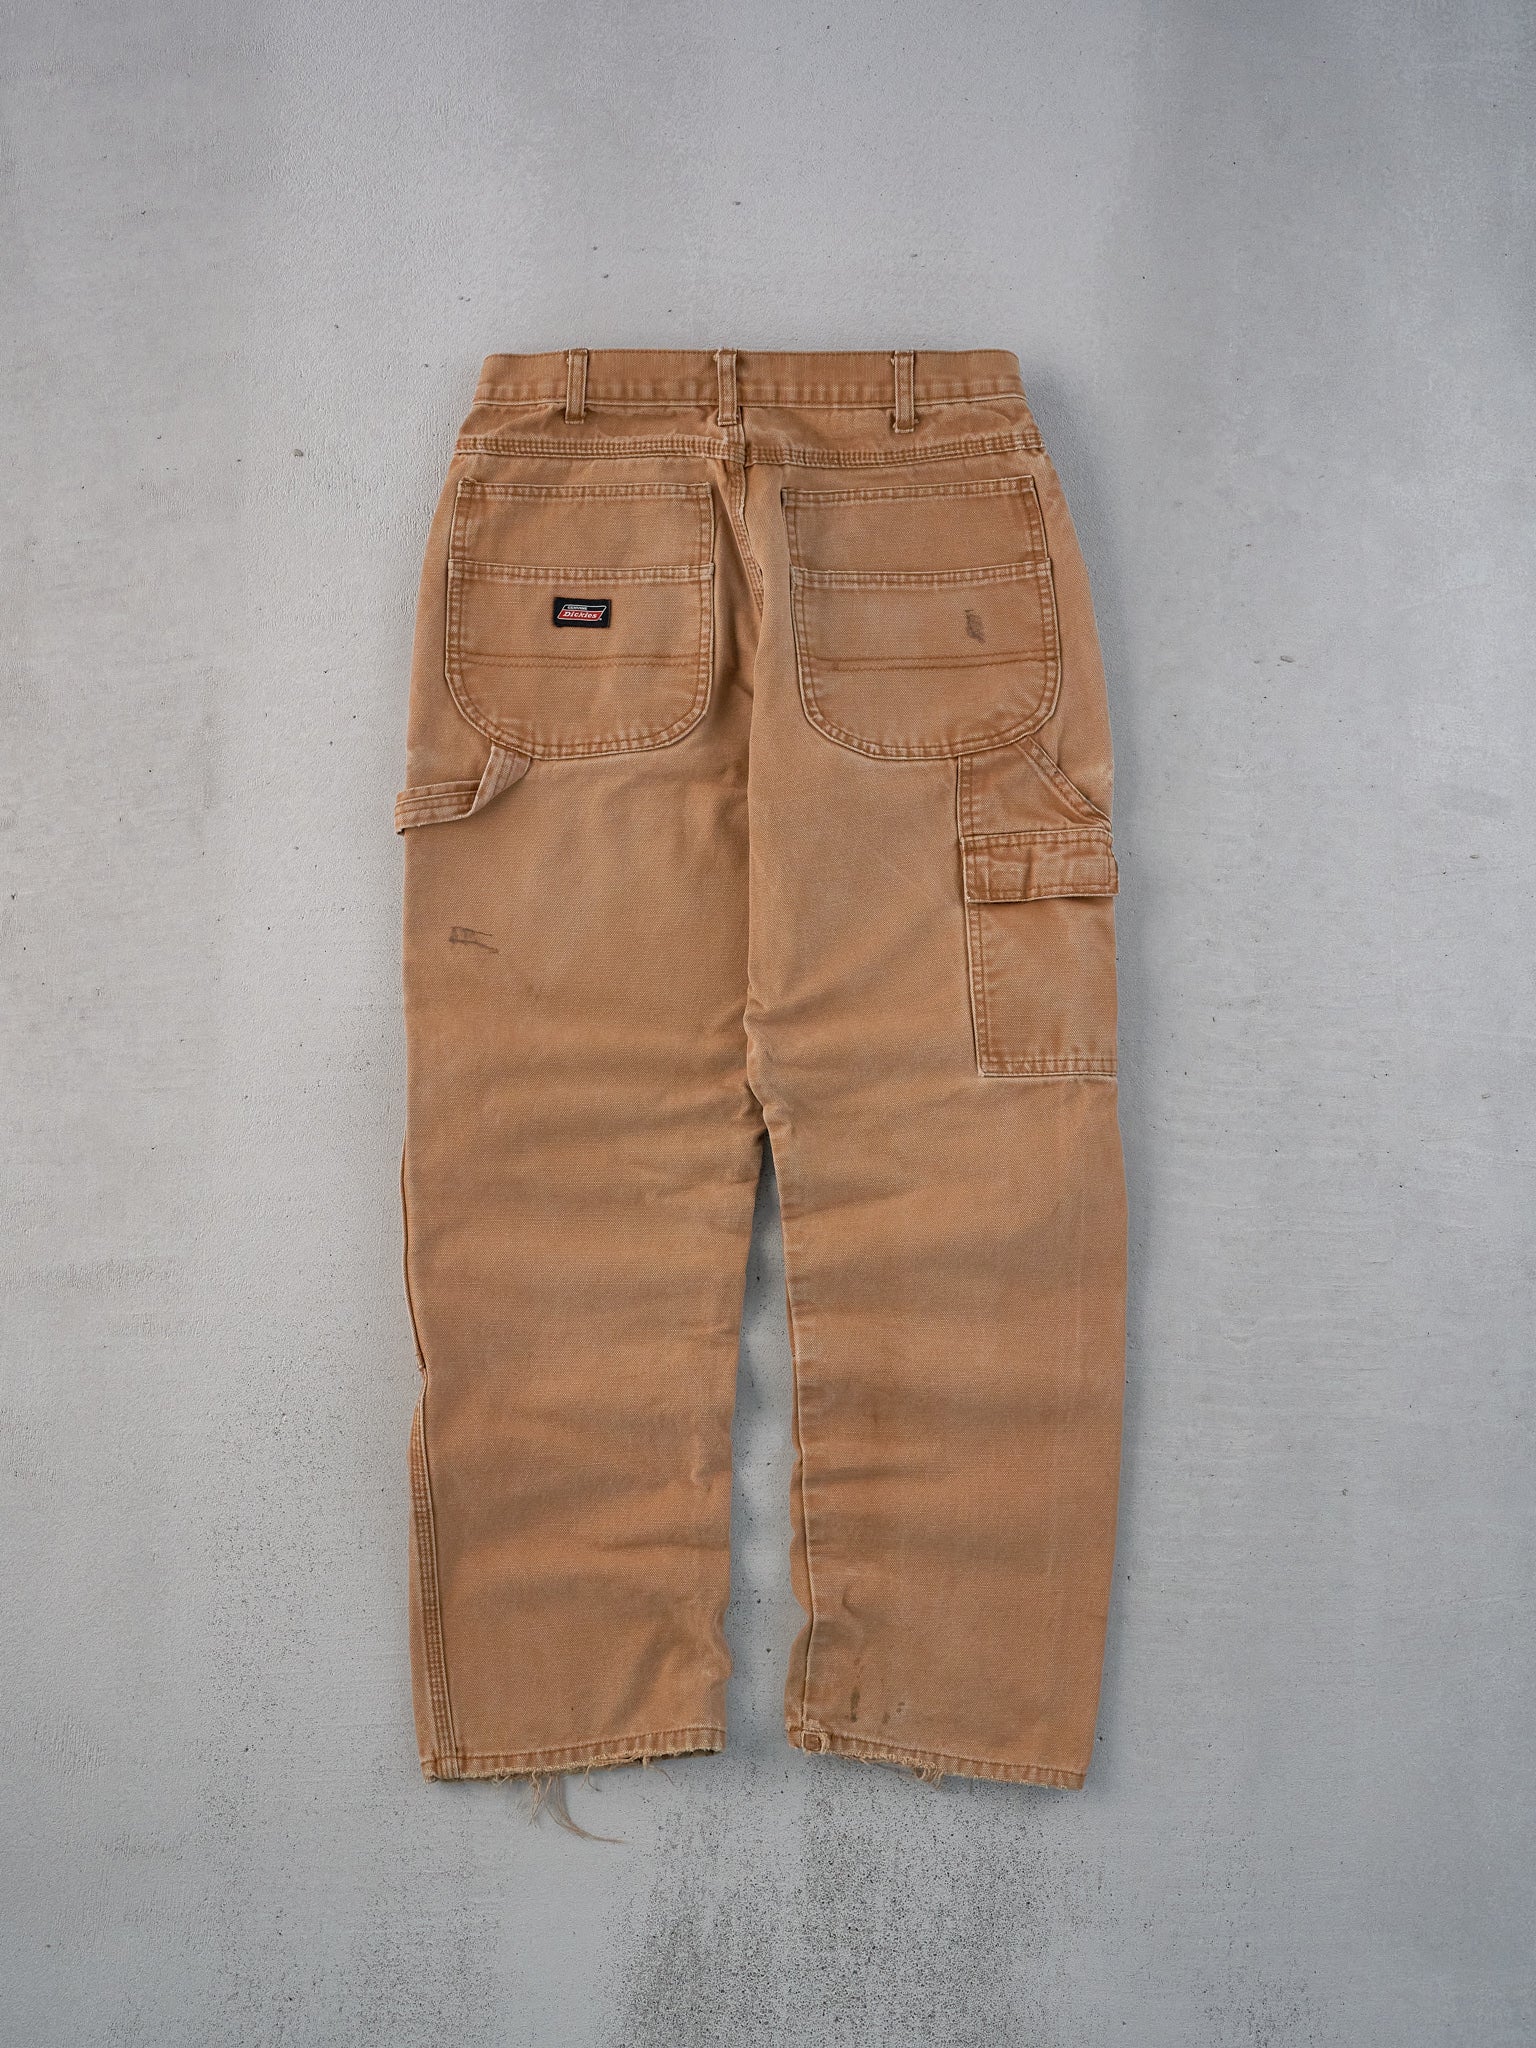 Vintage 90s Khaki Dickies Double Knee Carpenter Pants (29x30)